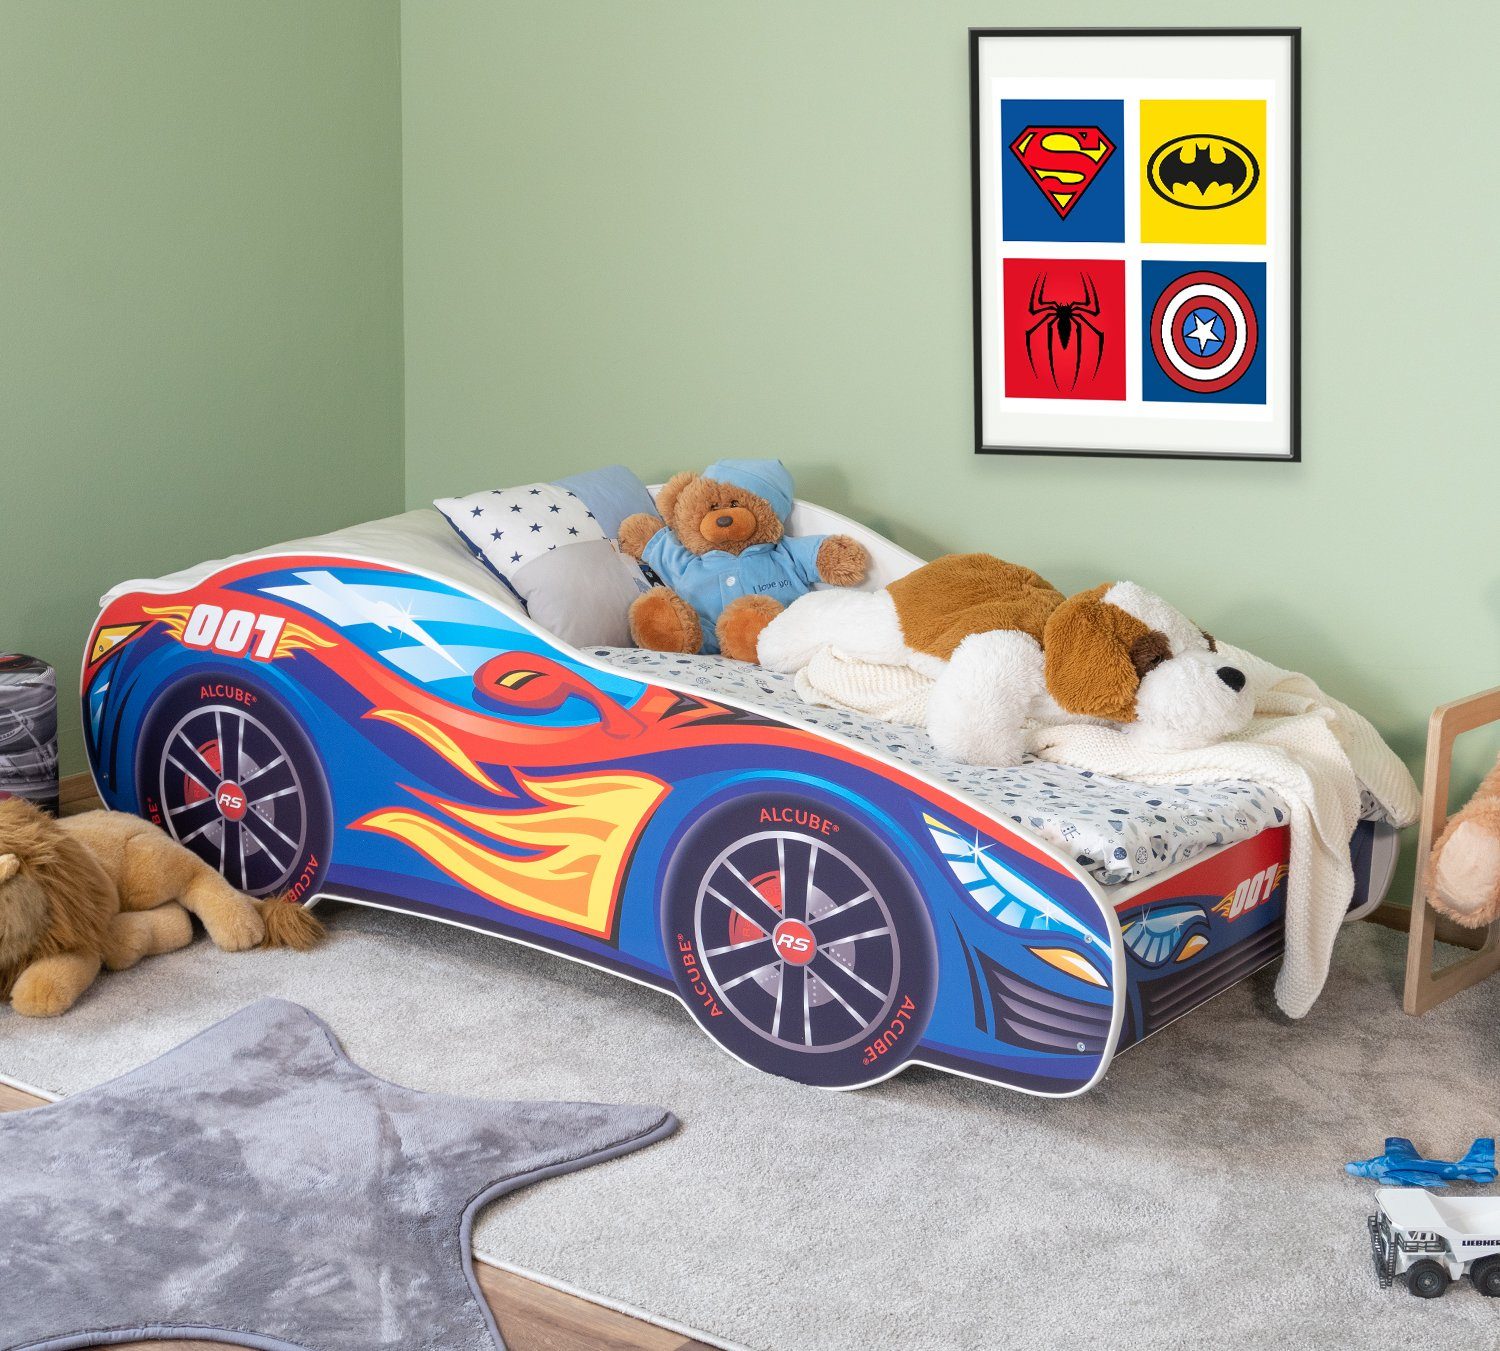 Alcube Autobett Racer (Komplett-Set Bett mit Matratze und Lattenrost),  Kinderbett 80x160 cm PKW Burning Flame, Rennwagen-Design Auto bett 160x80 cm